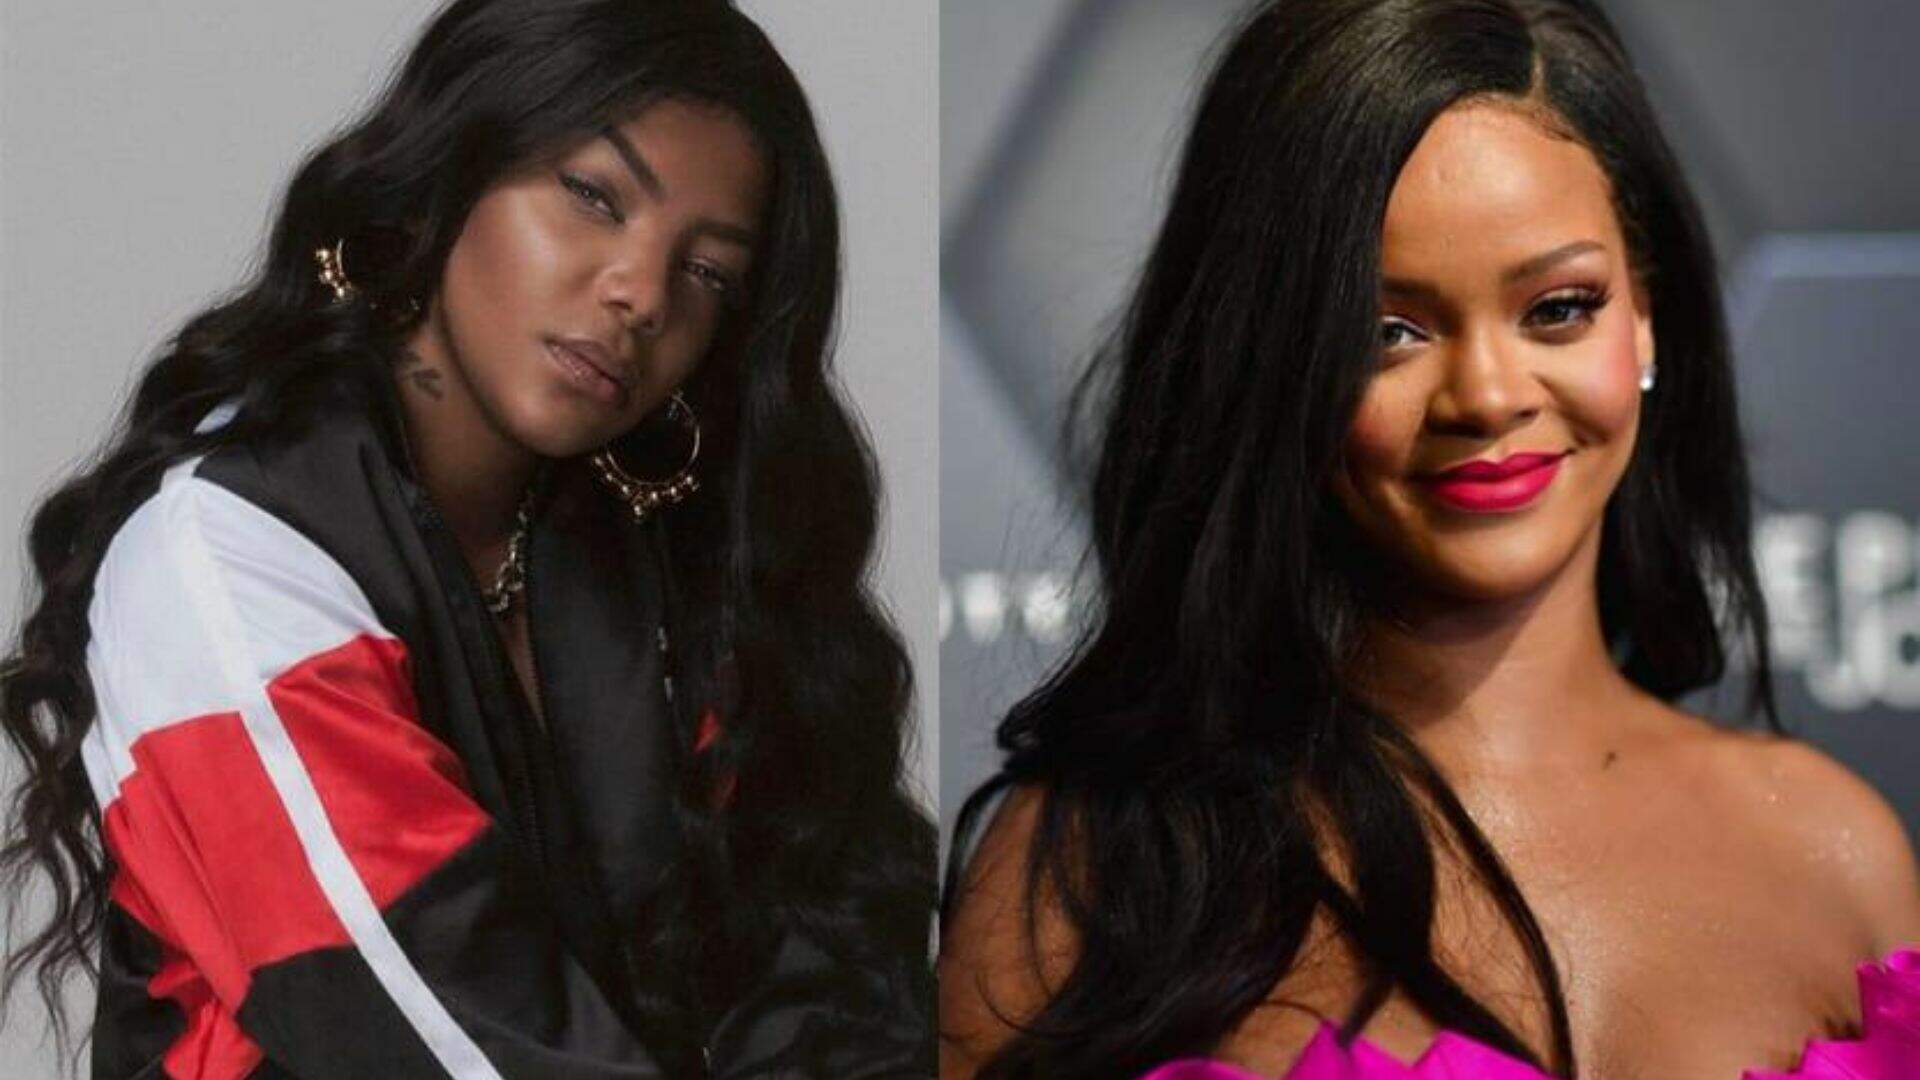 Ludmilla recusa presente inusitado de Rihanna: “Eu tinha medo de tudo” - Metropolitana FM